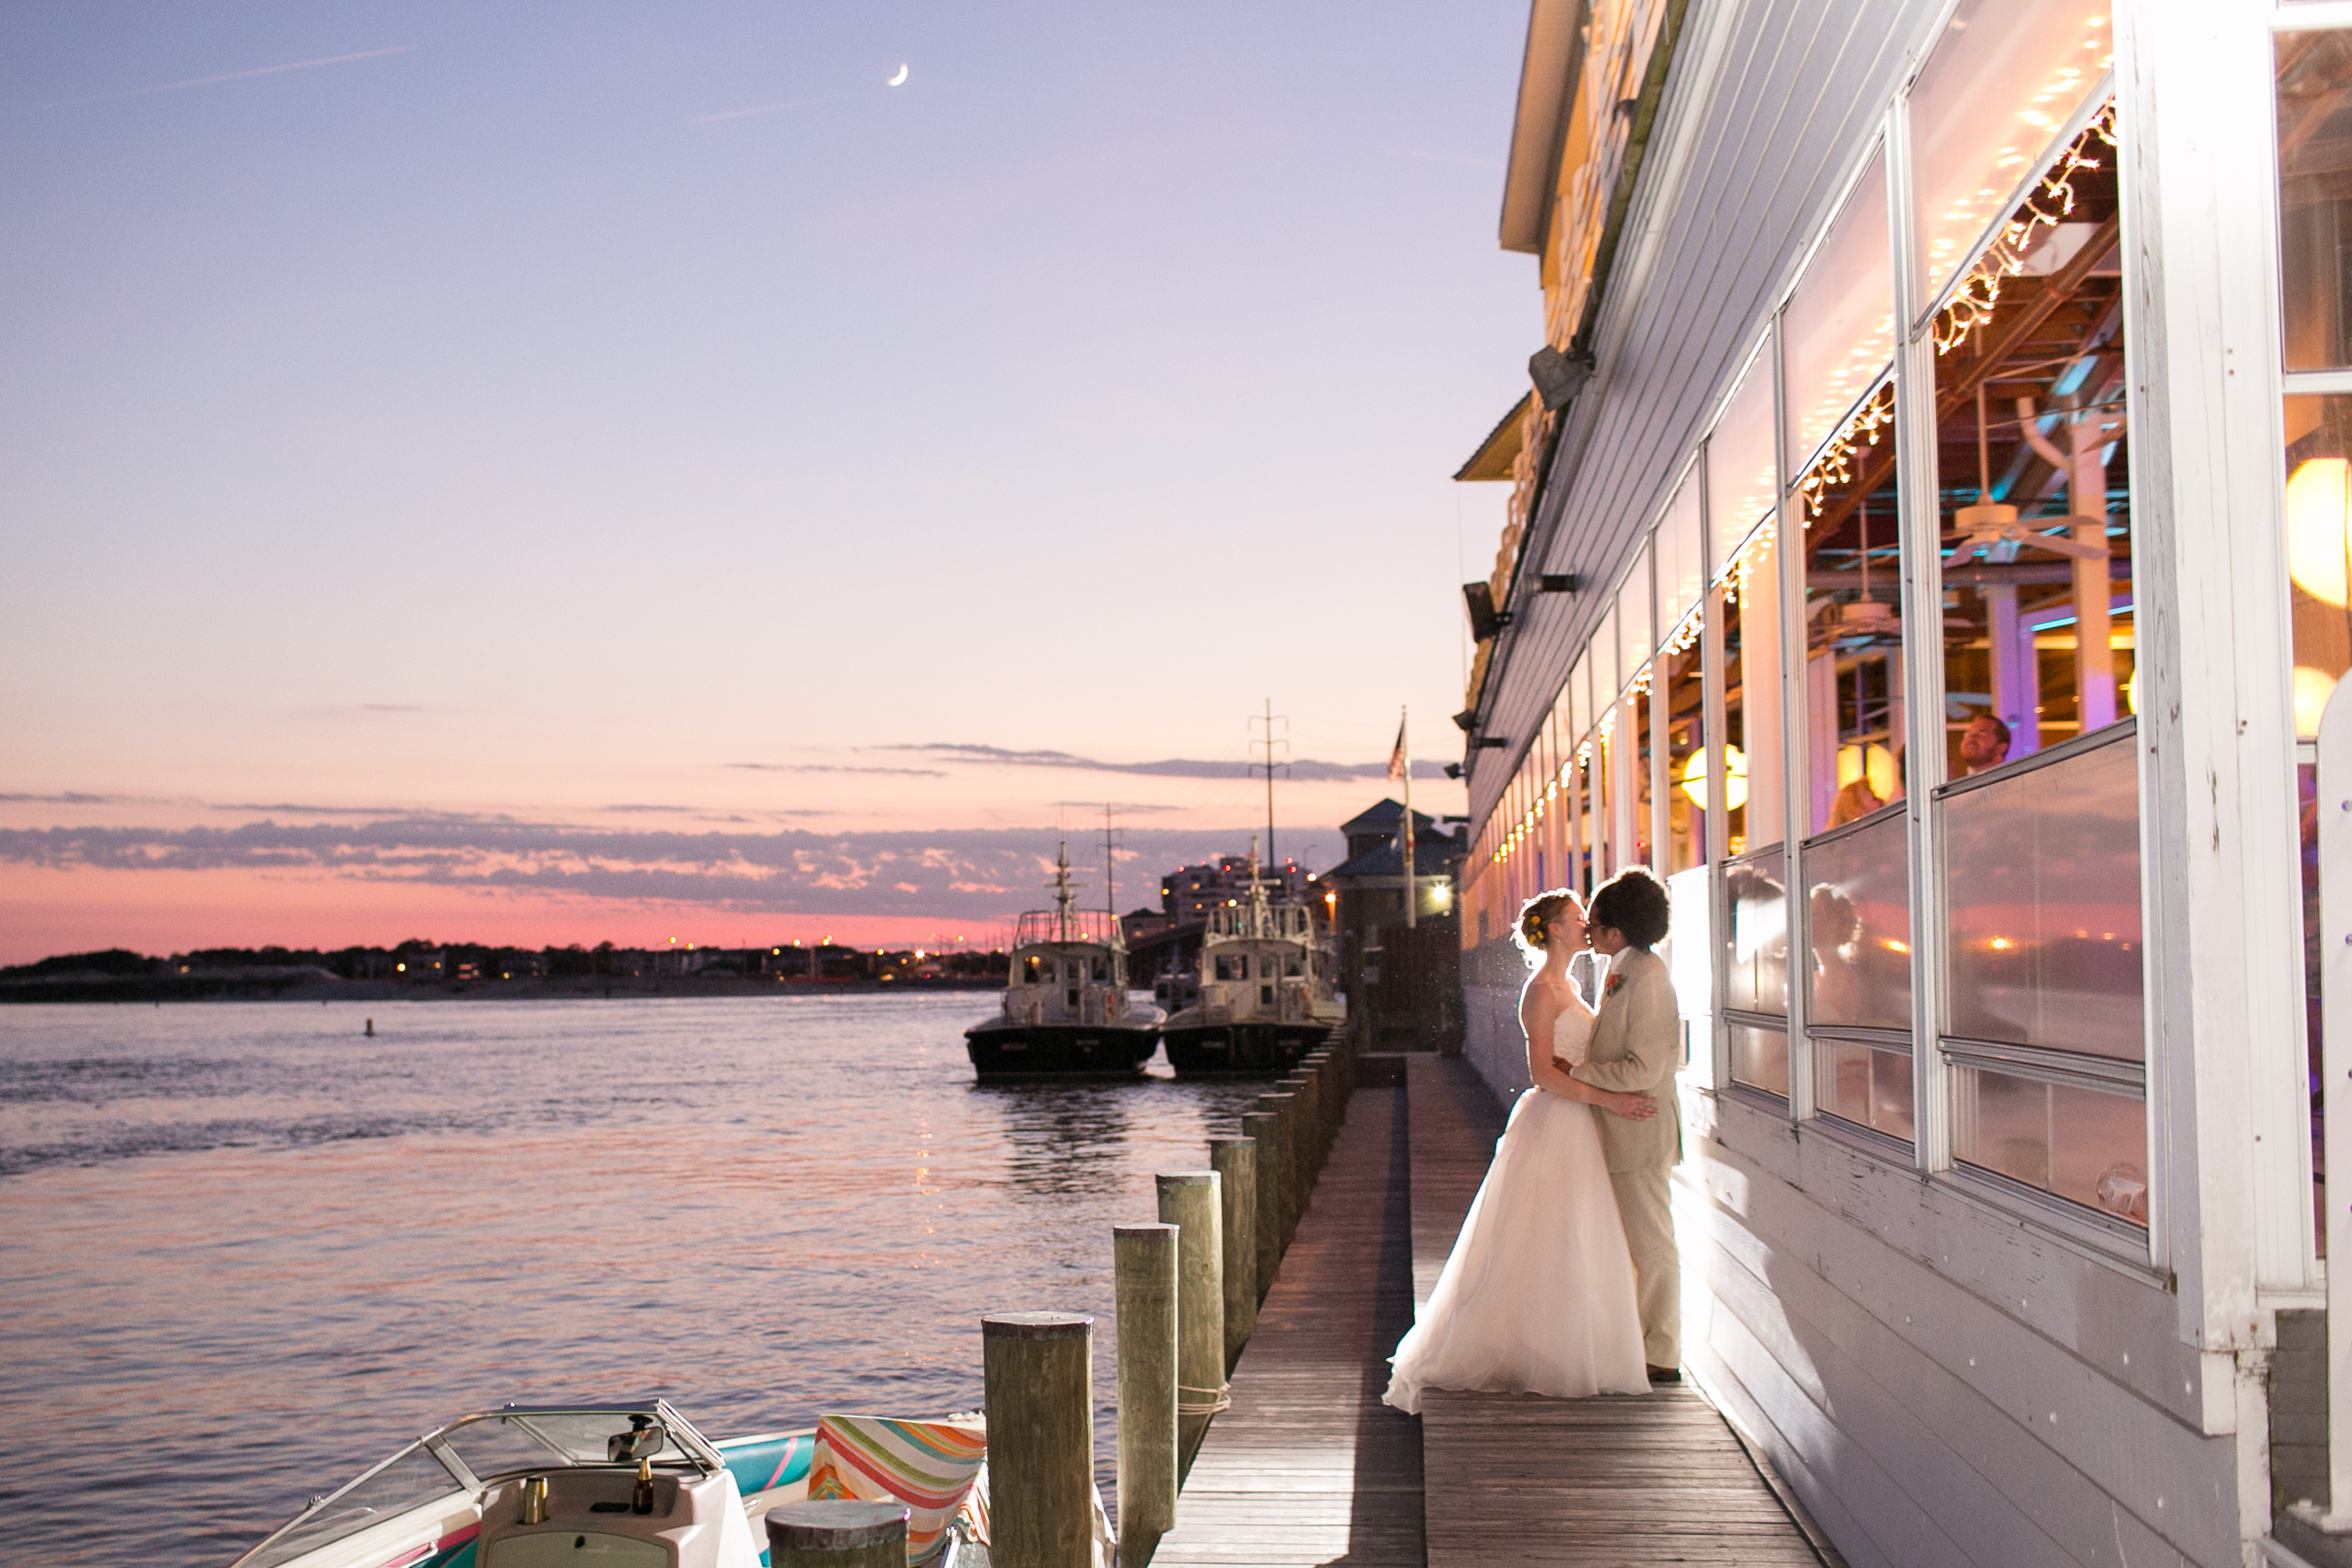 Virginia Beach Weddings Planning Guide Services Inspiration